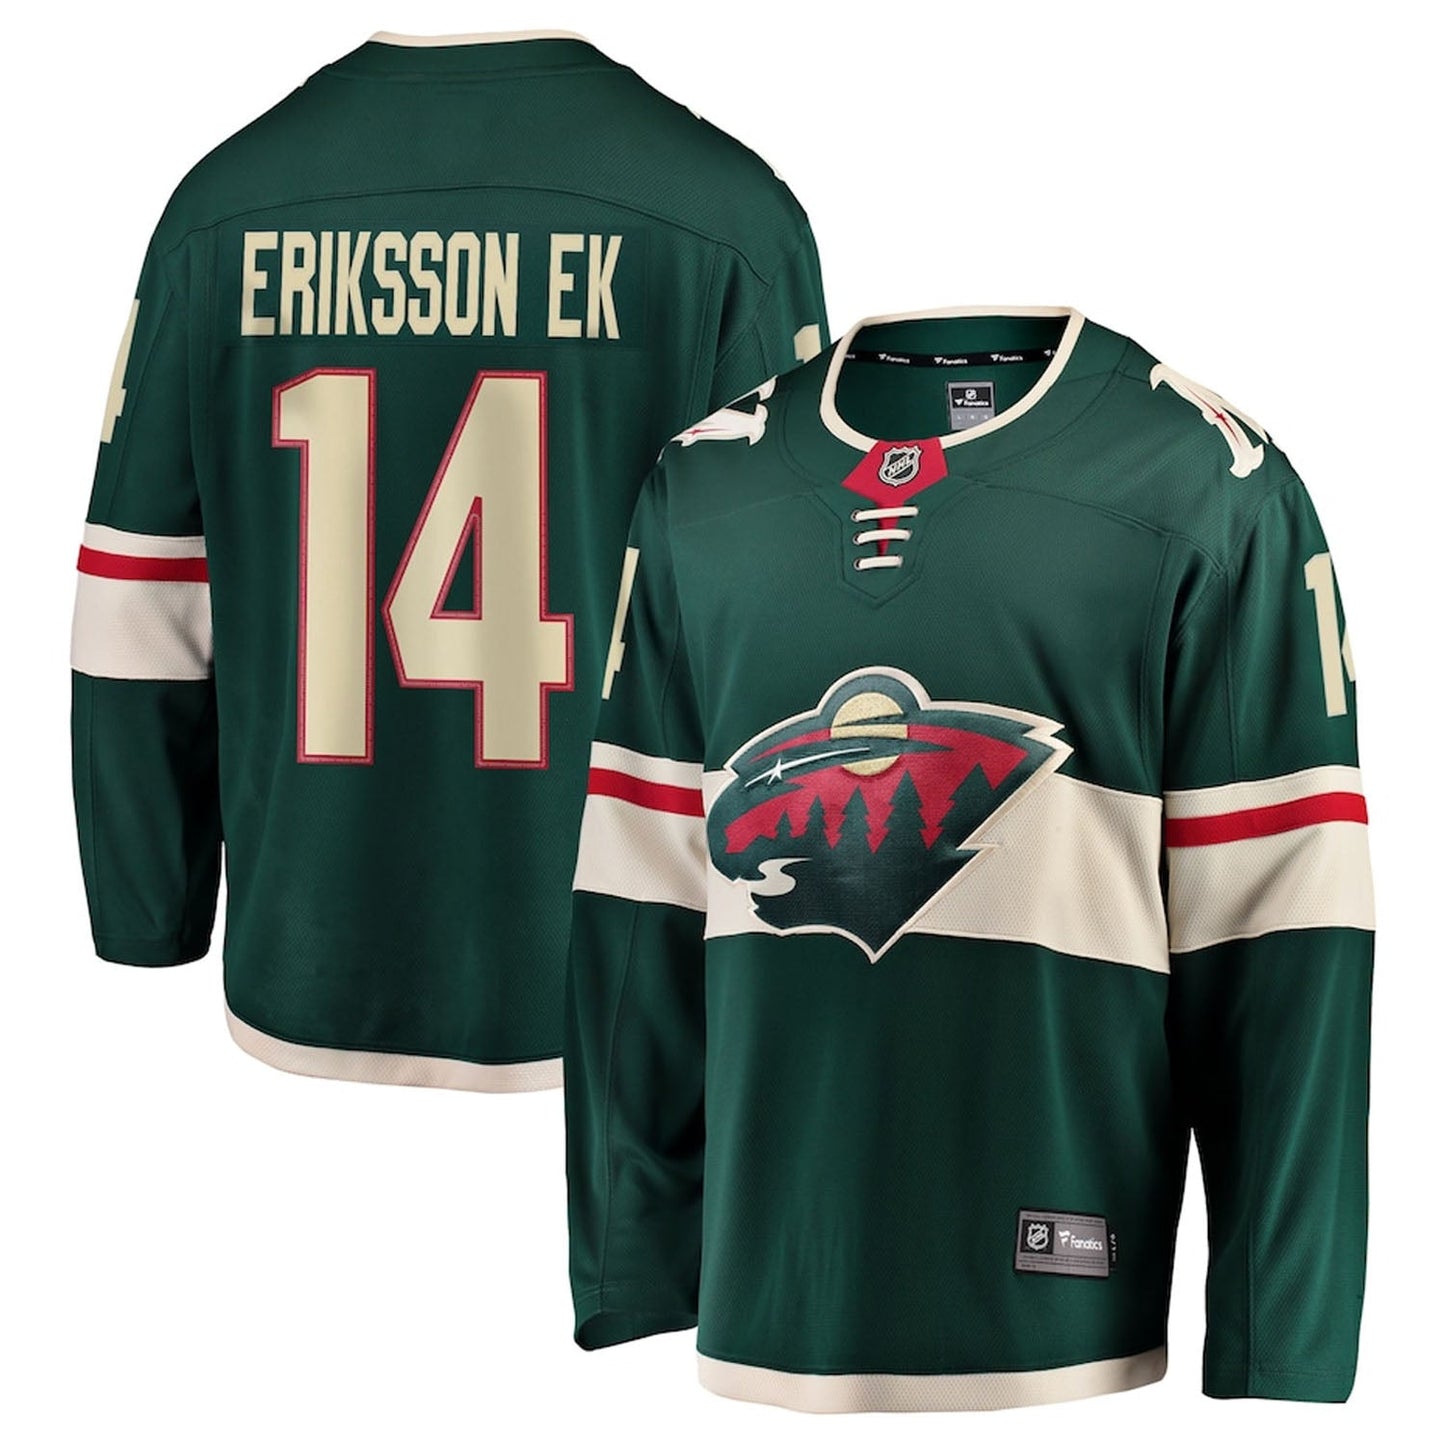 NHL Joel Eriksson Ek Minnesota Wild 14 Jersey